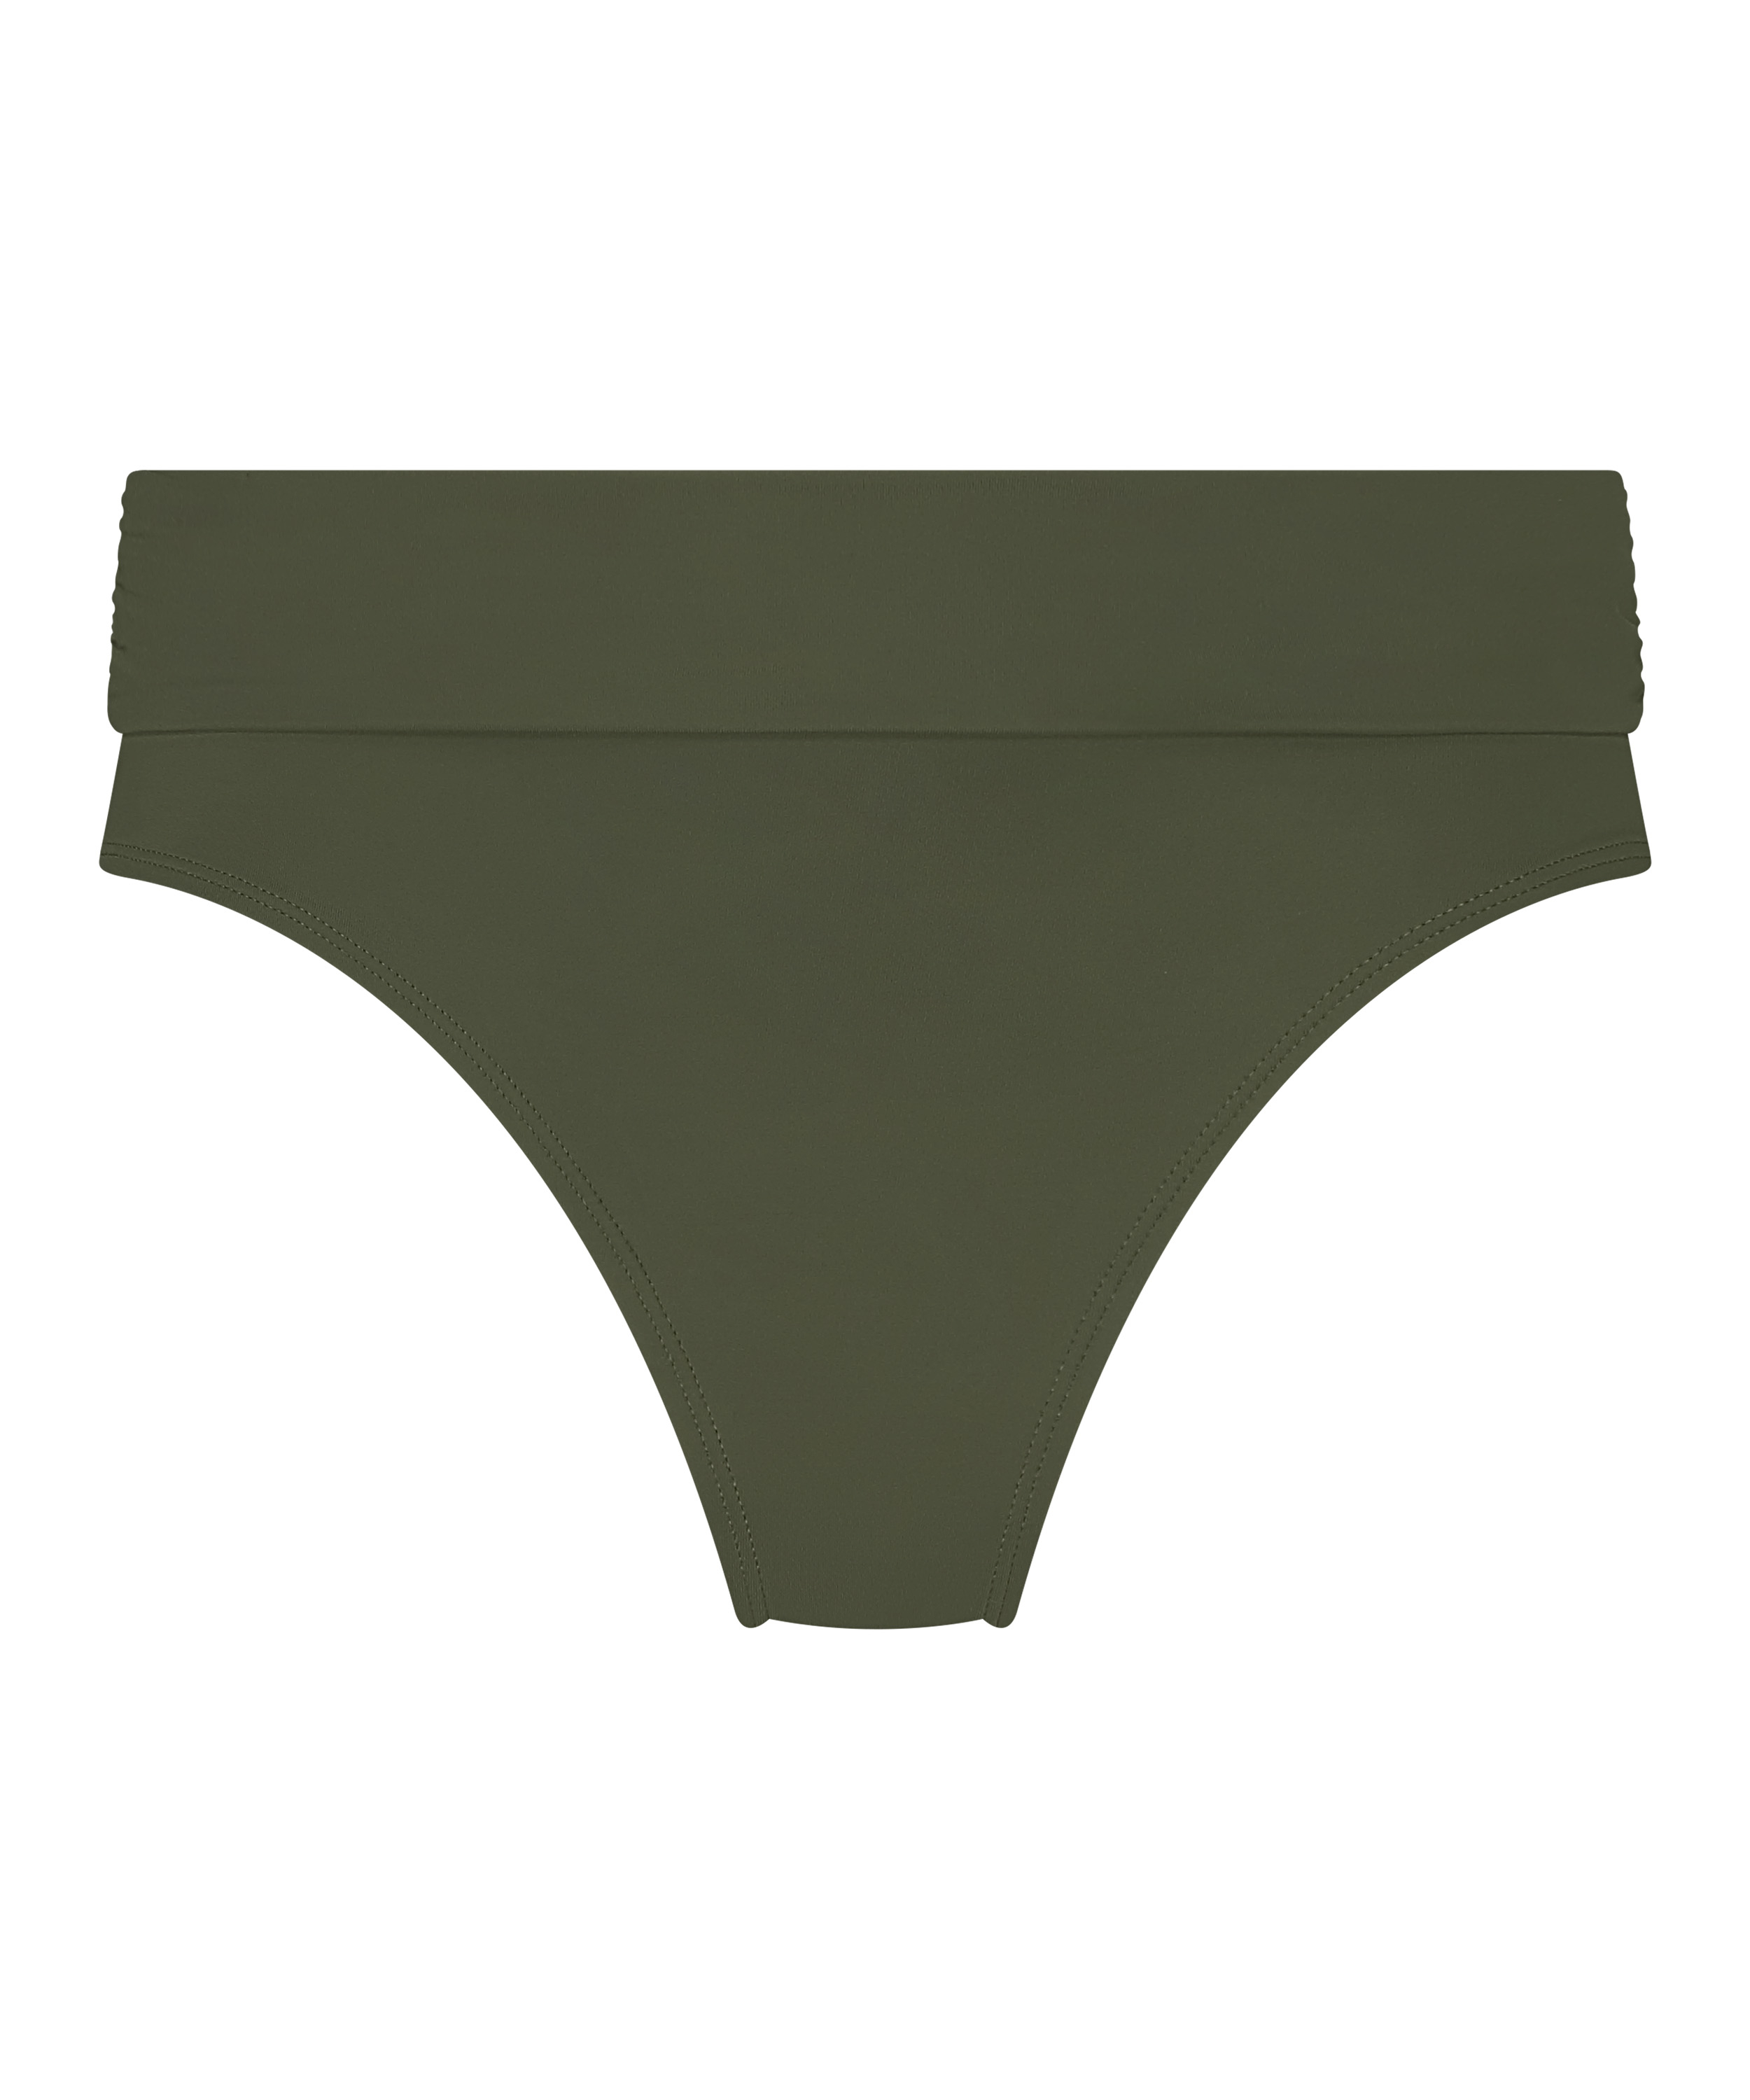 Luxe Rio Bikini Bottoms, Green, main